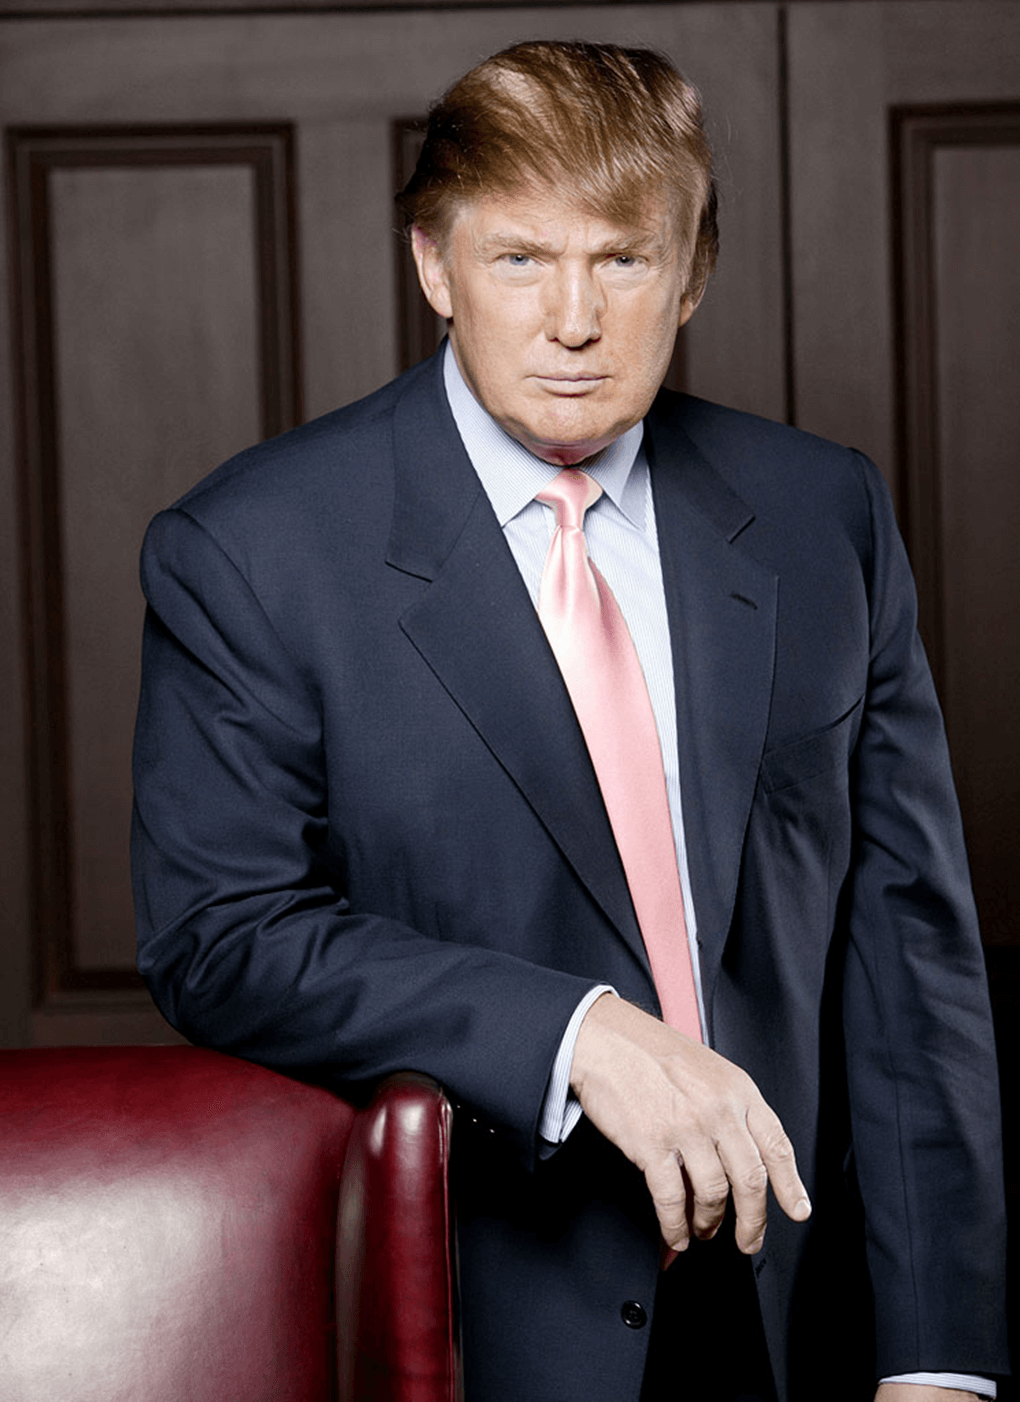 American Politician Donald Trump HD Wallpaper Image And Photo